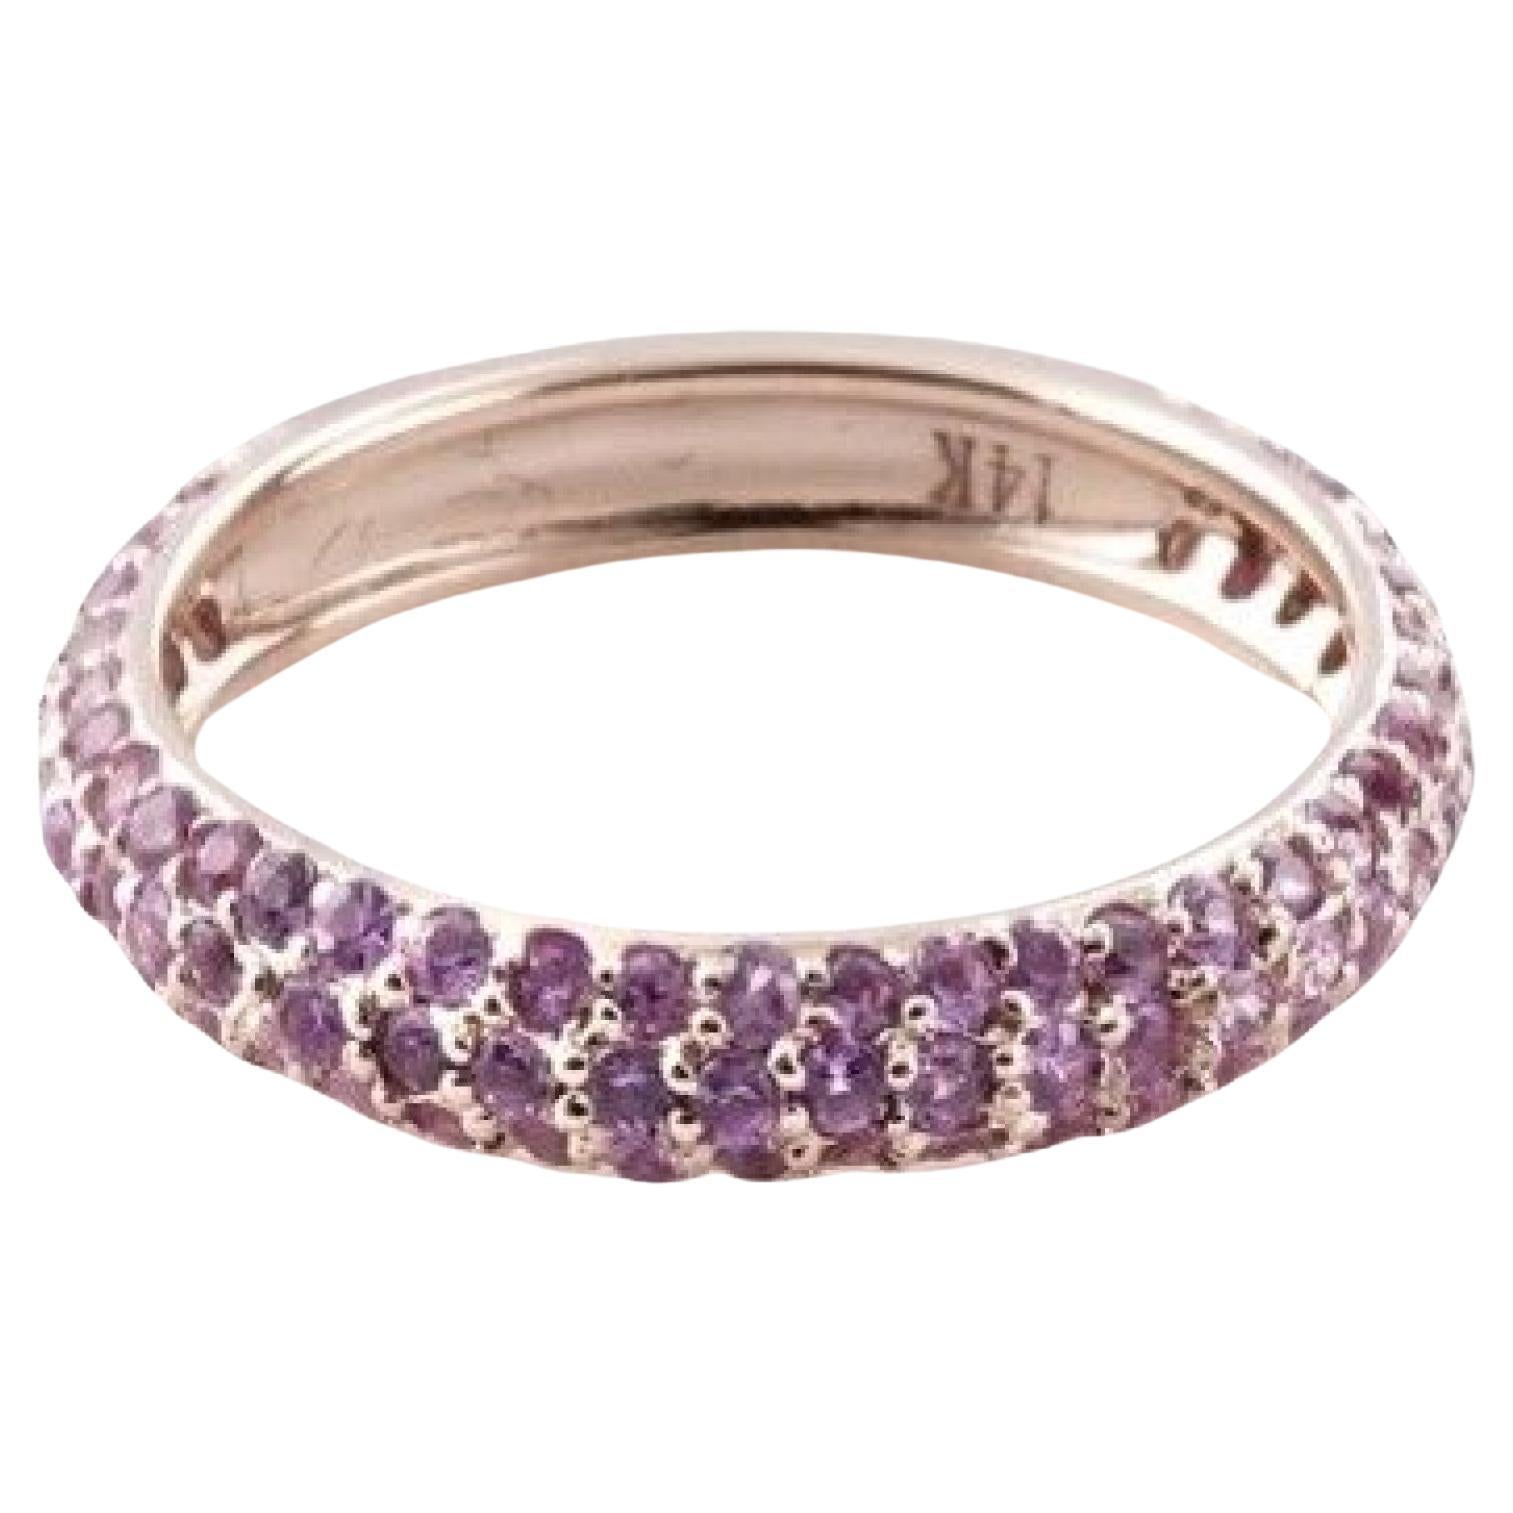 For Sale:  1.138 Carat Pink Sapphire Ring in 14 Karat Rose Gold